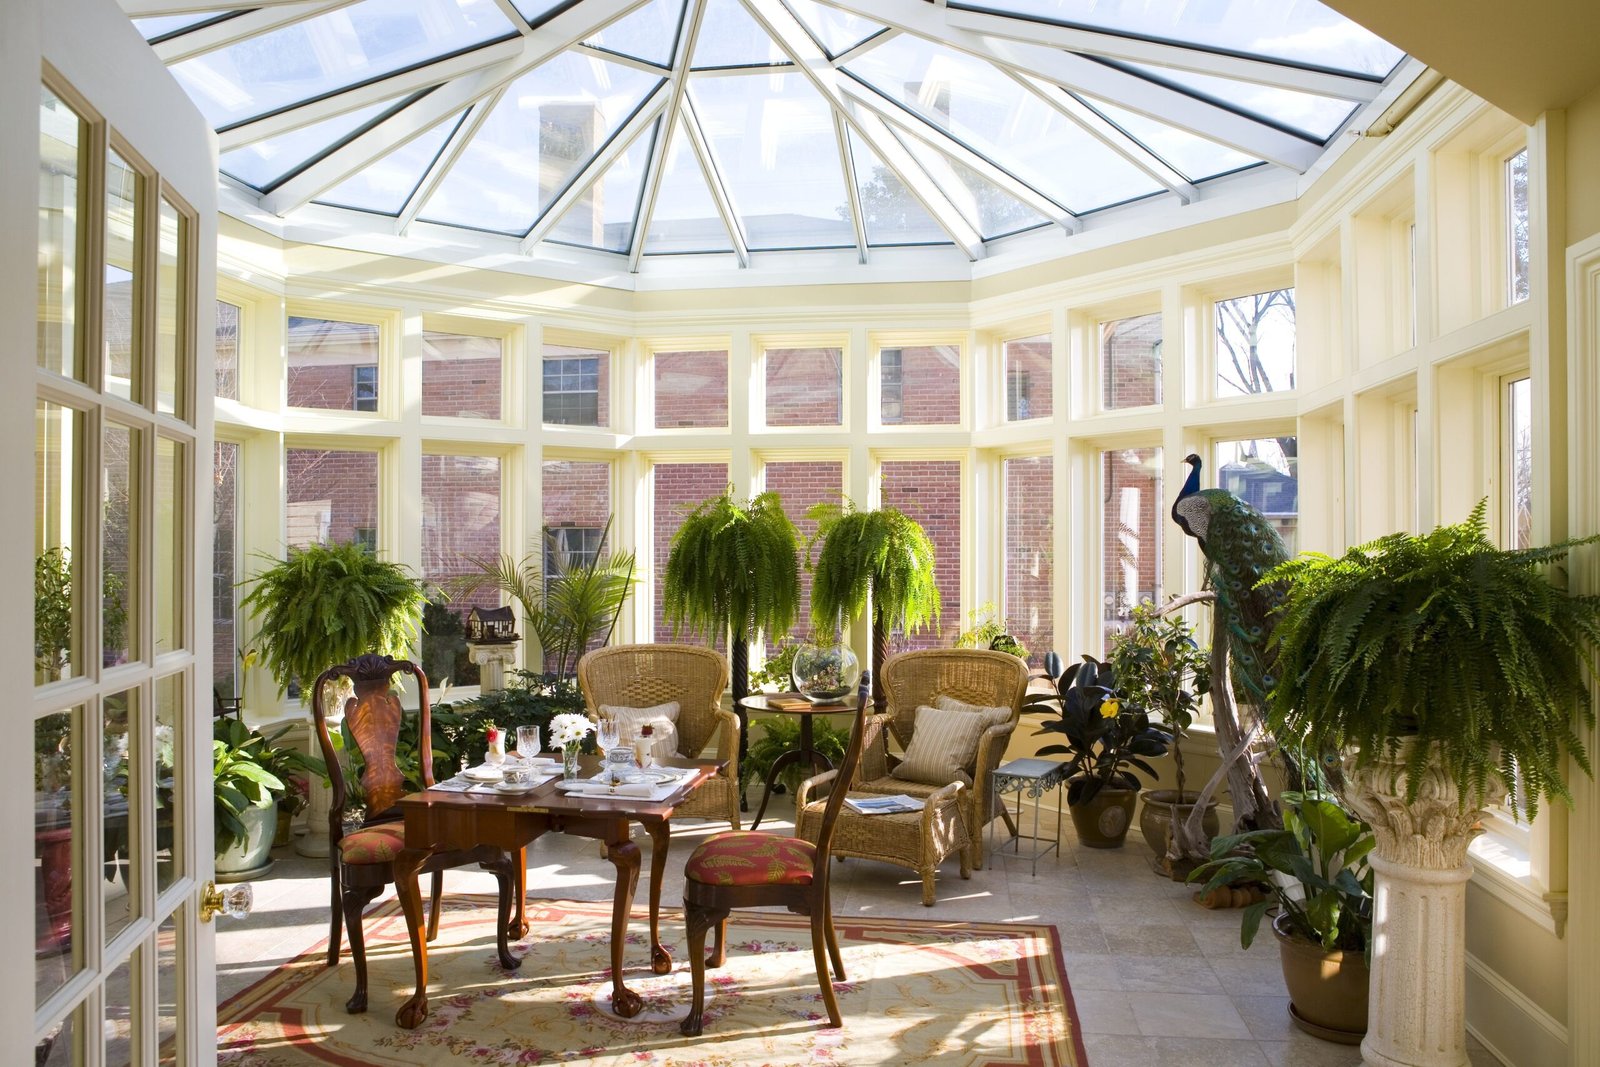 A conservatory